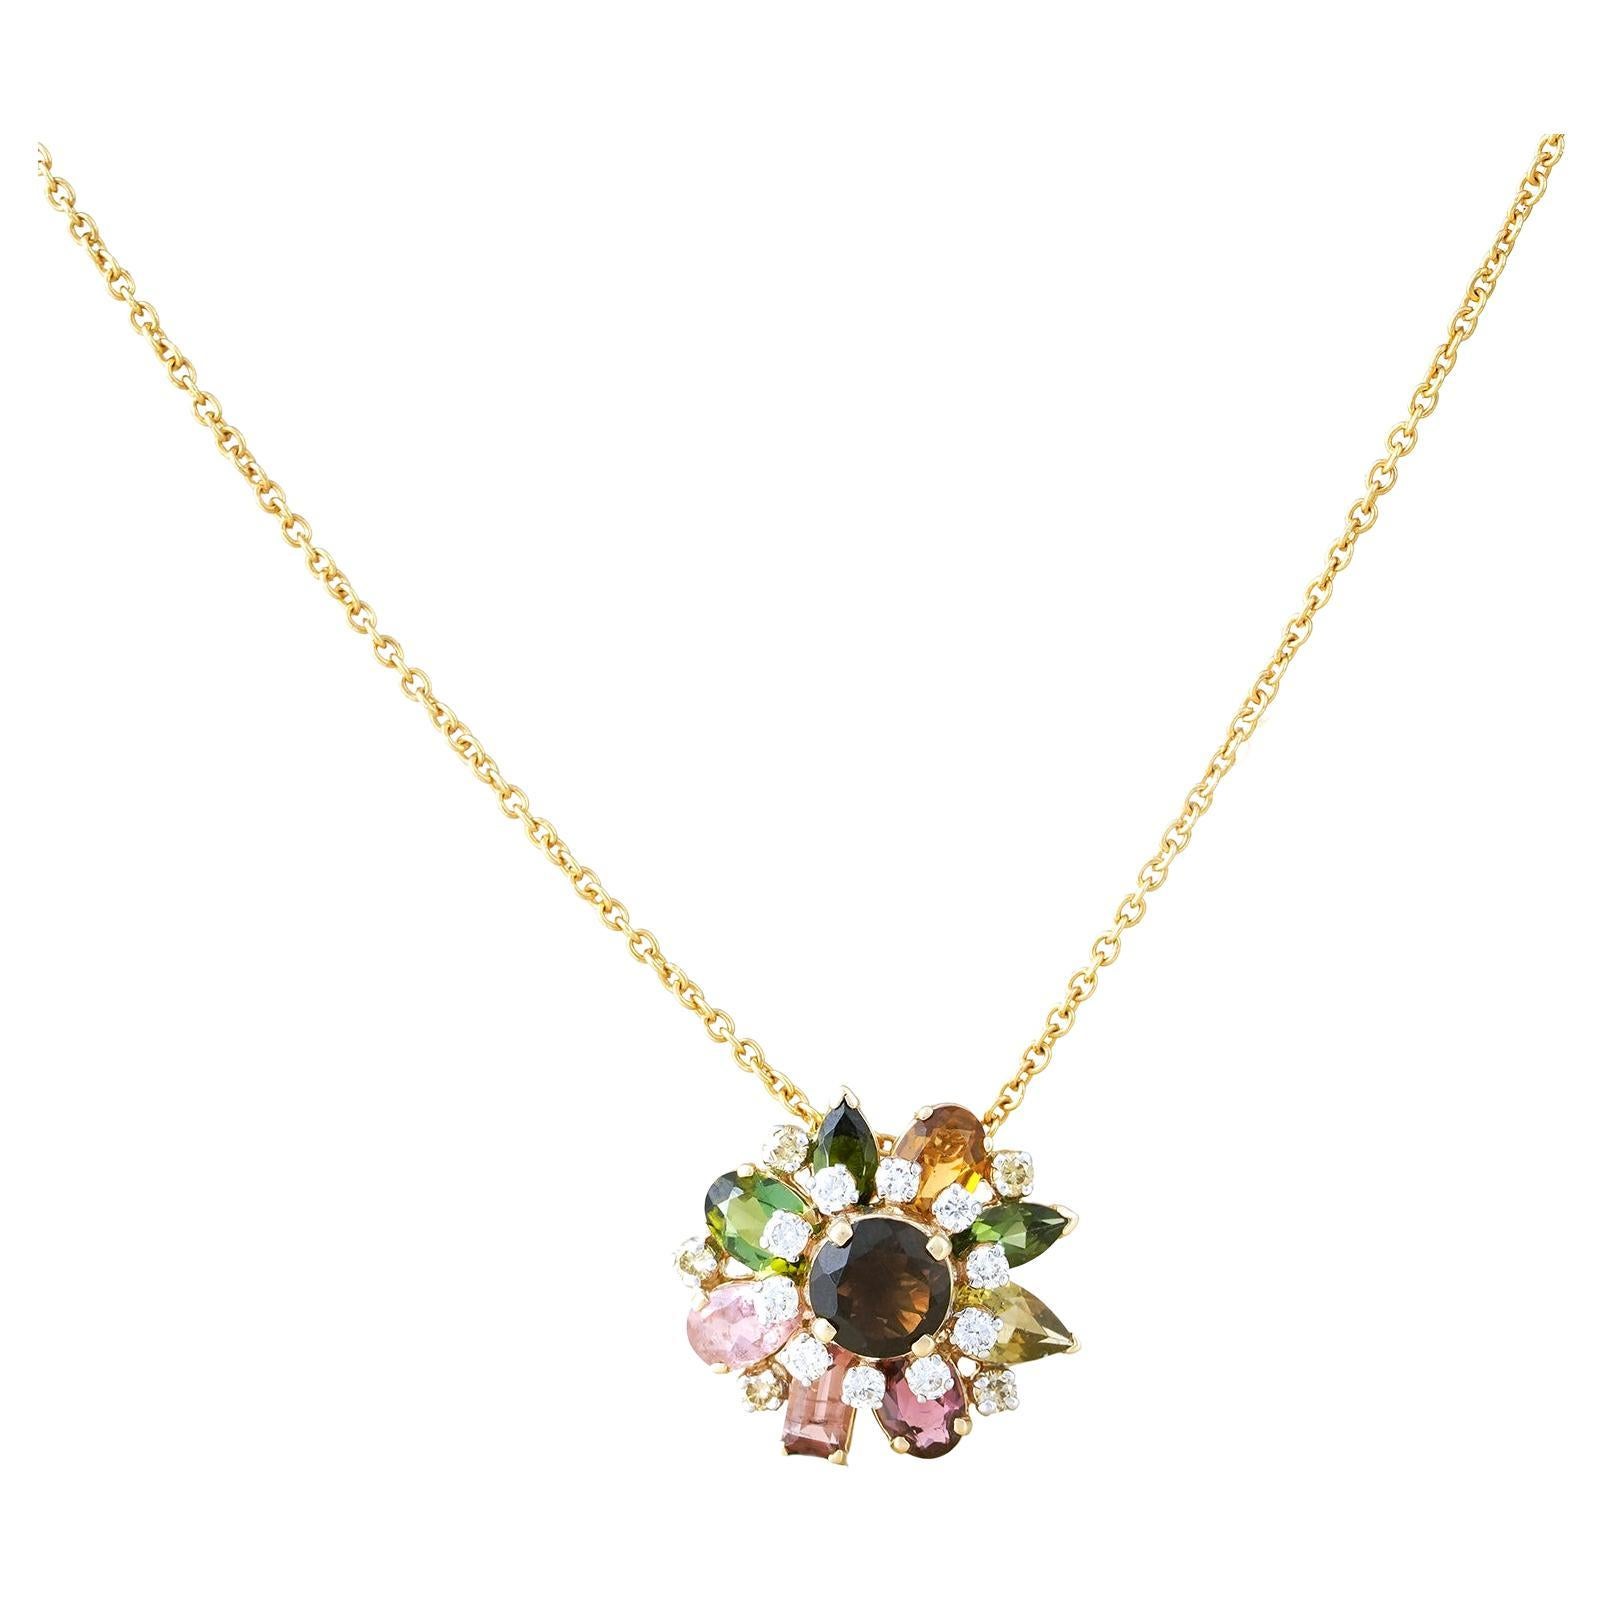 Moi Autumn Gold Diamond and Gemstones Pendant Necklace